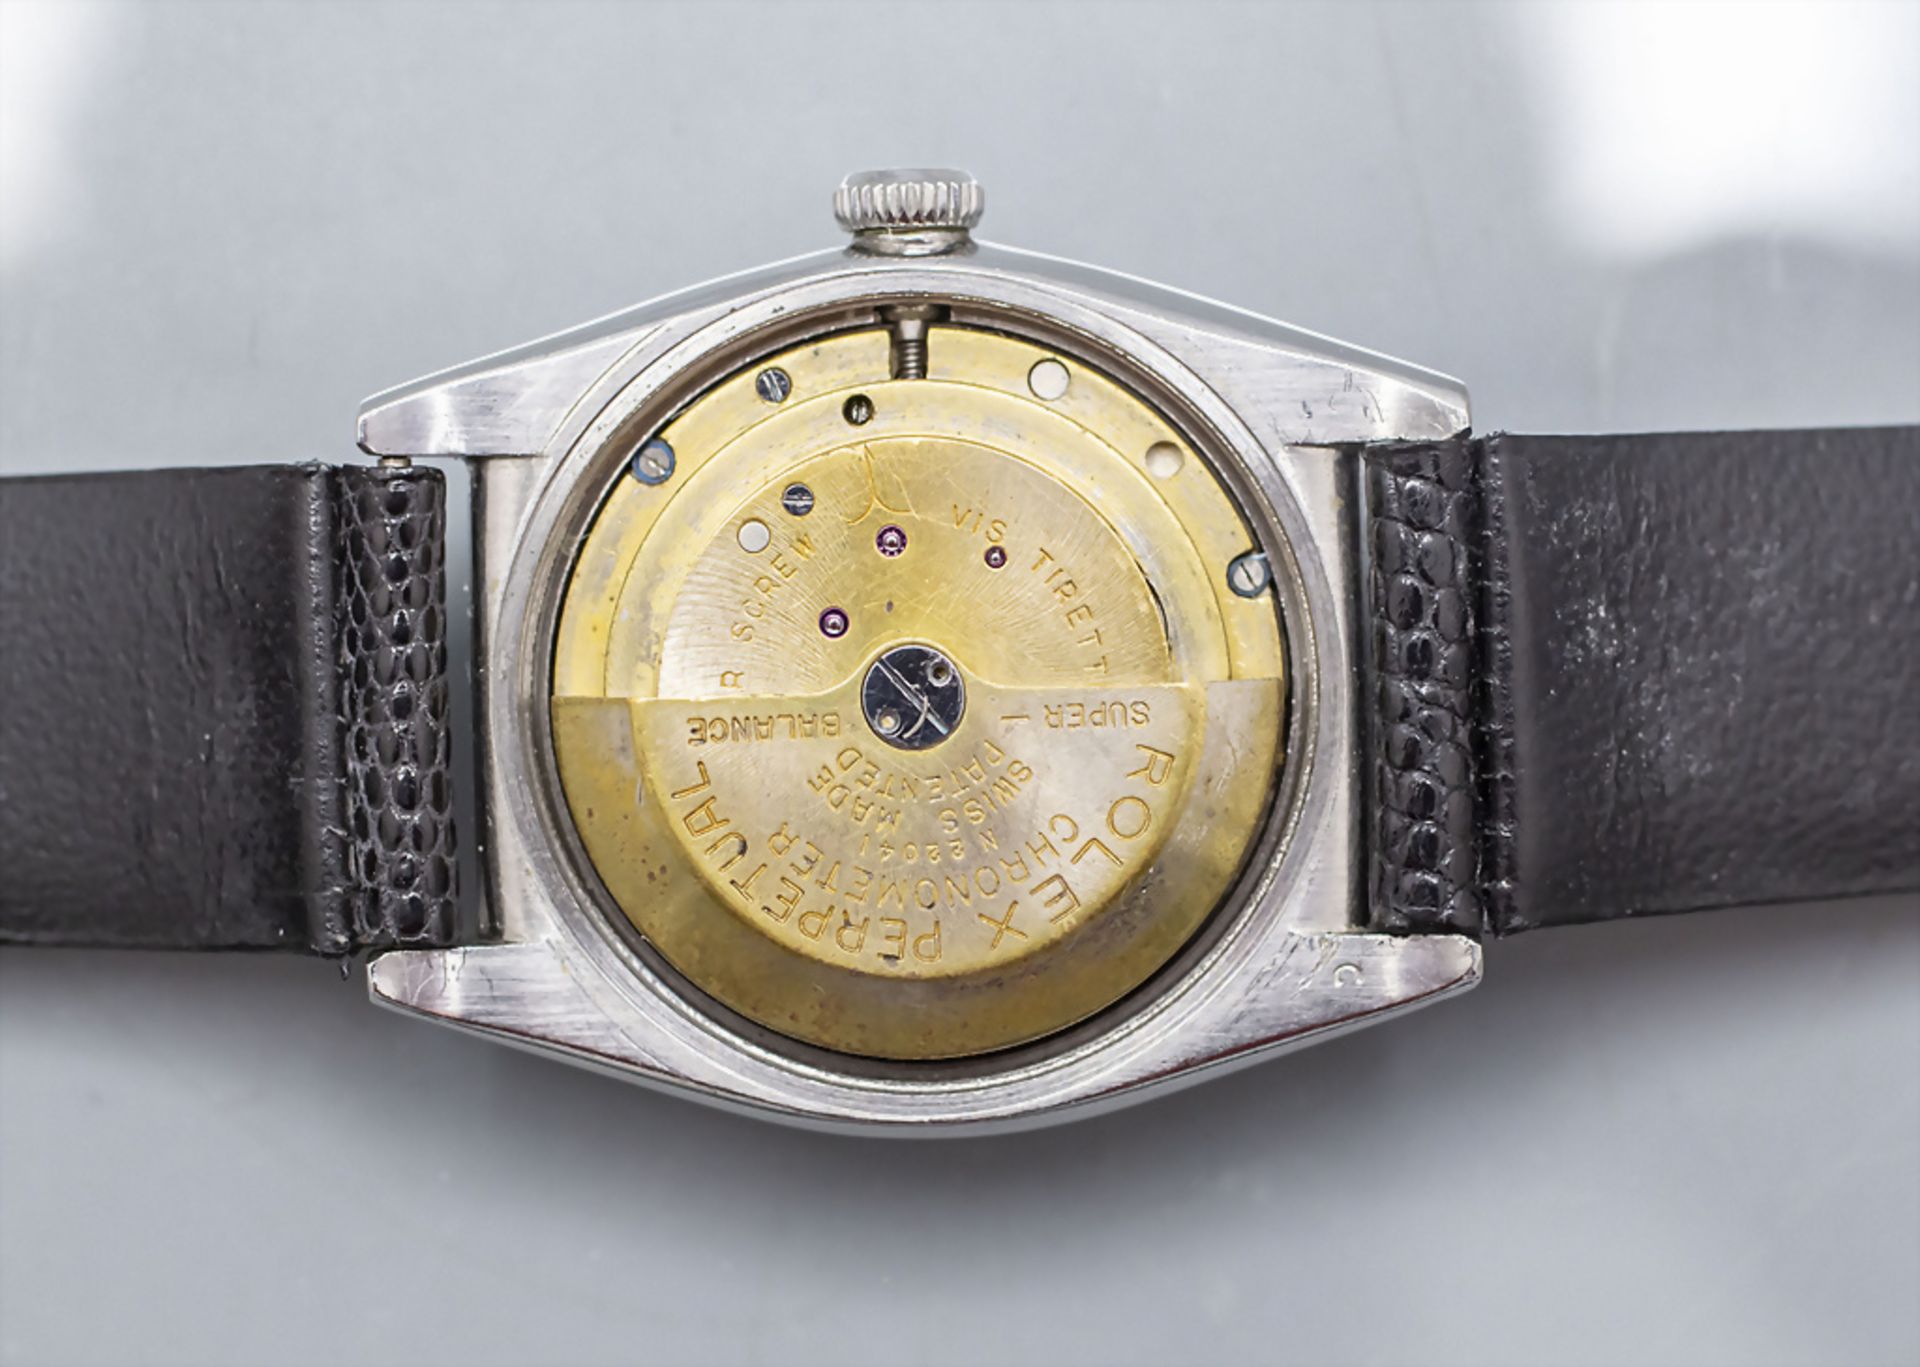 Rolex Bubbleback Oyster Perpetual Chronometer, Schweiz / Swiss, um 1950 - Image 4 of 8